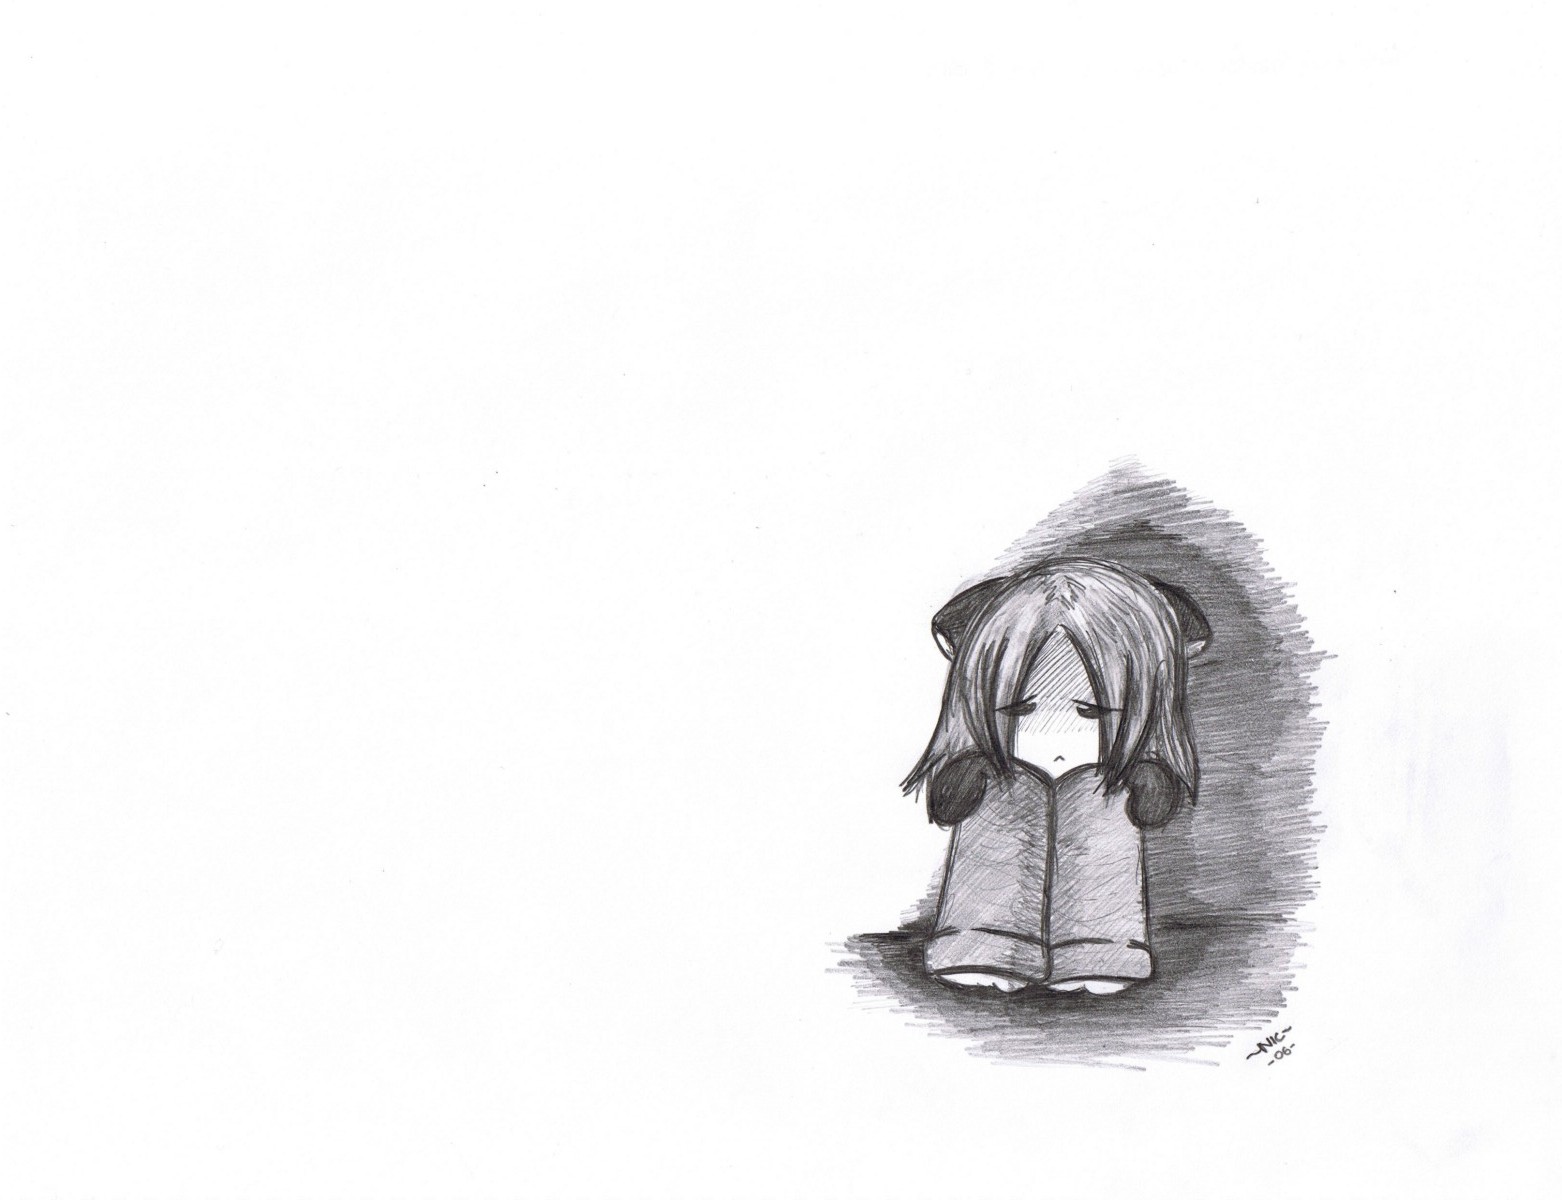 ~sadness and sorrow~ =( by NicNic